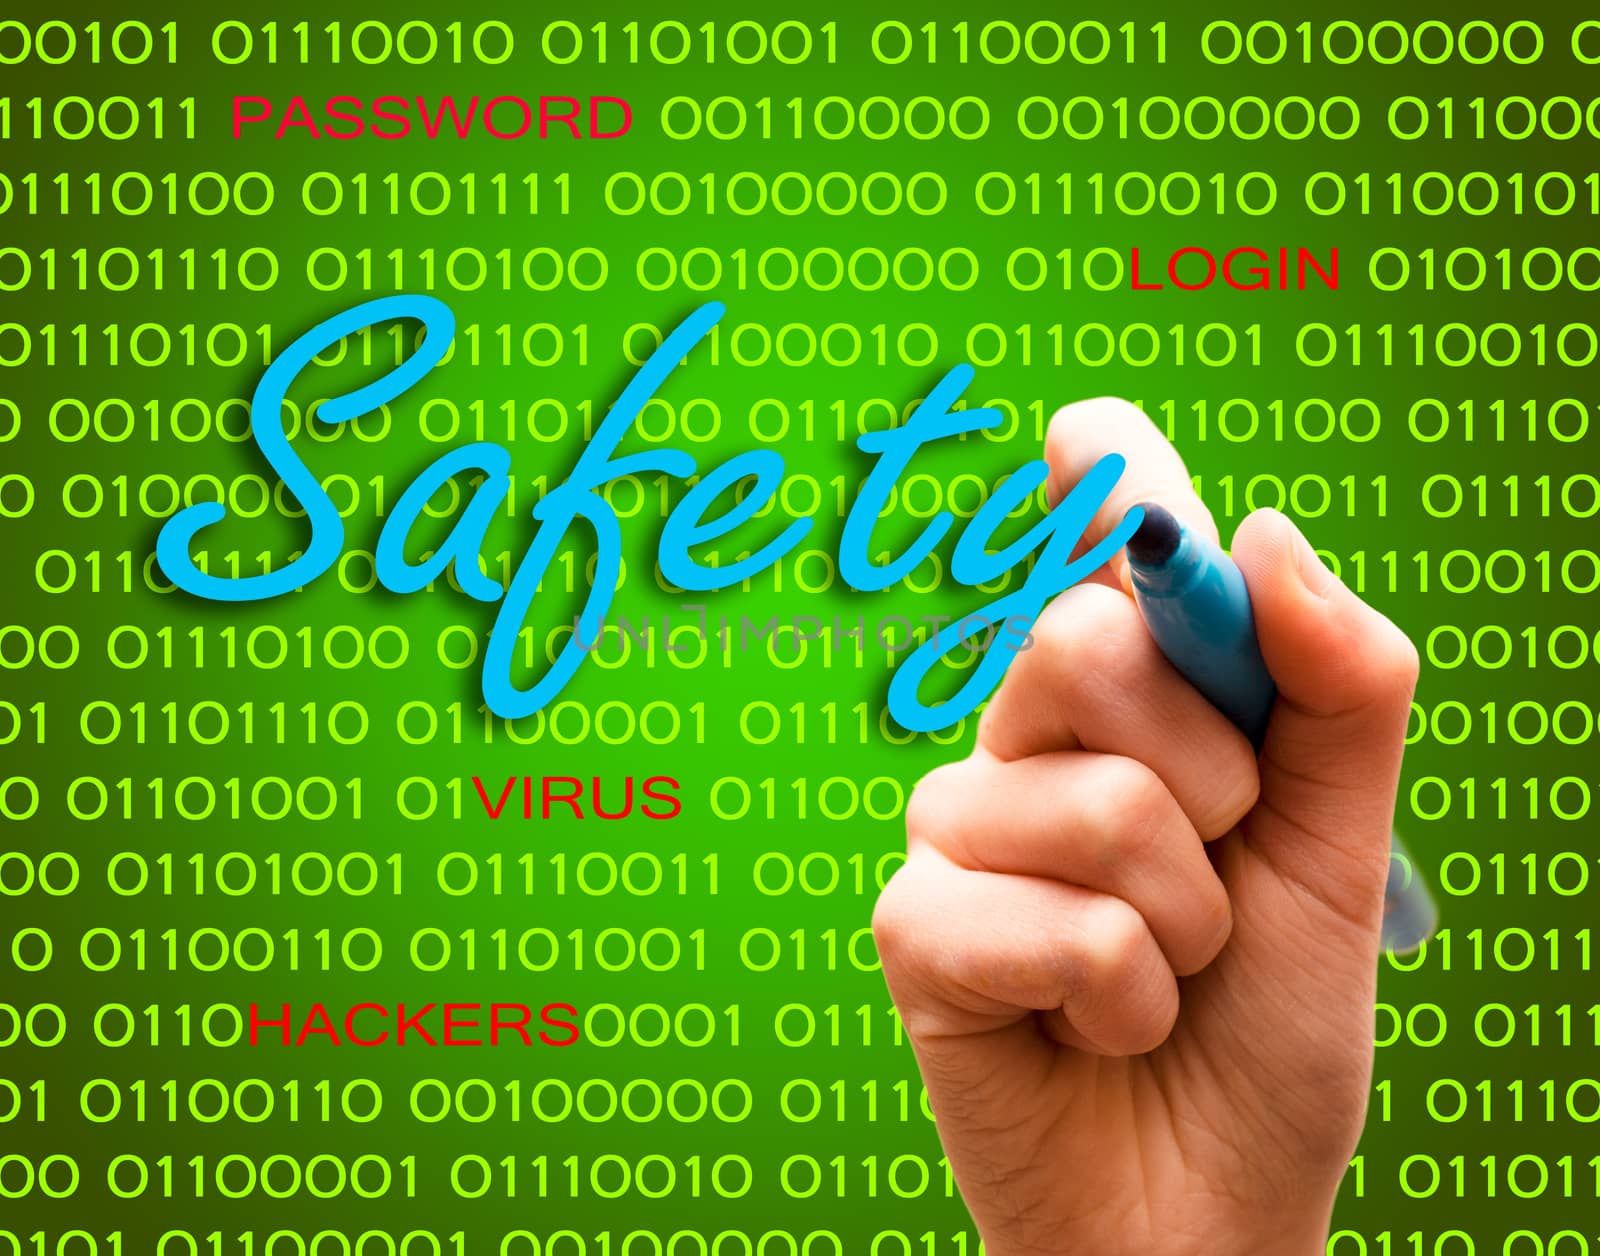 Safety password login virus hackers hand binary text by Havana